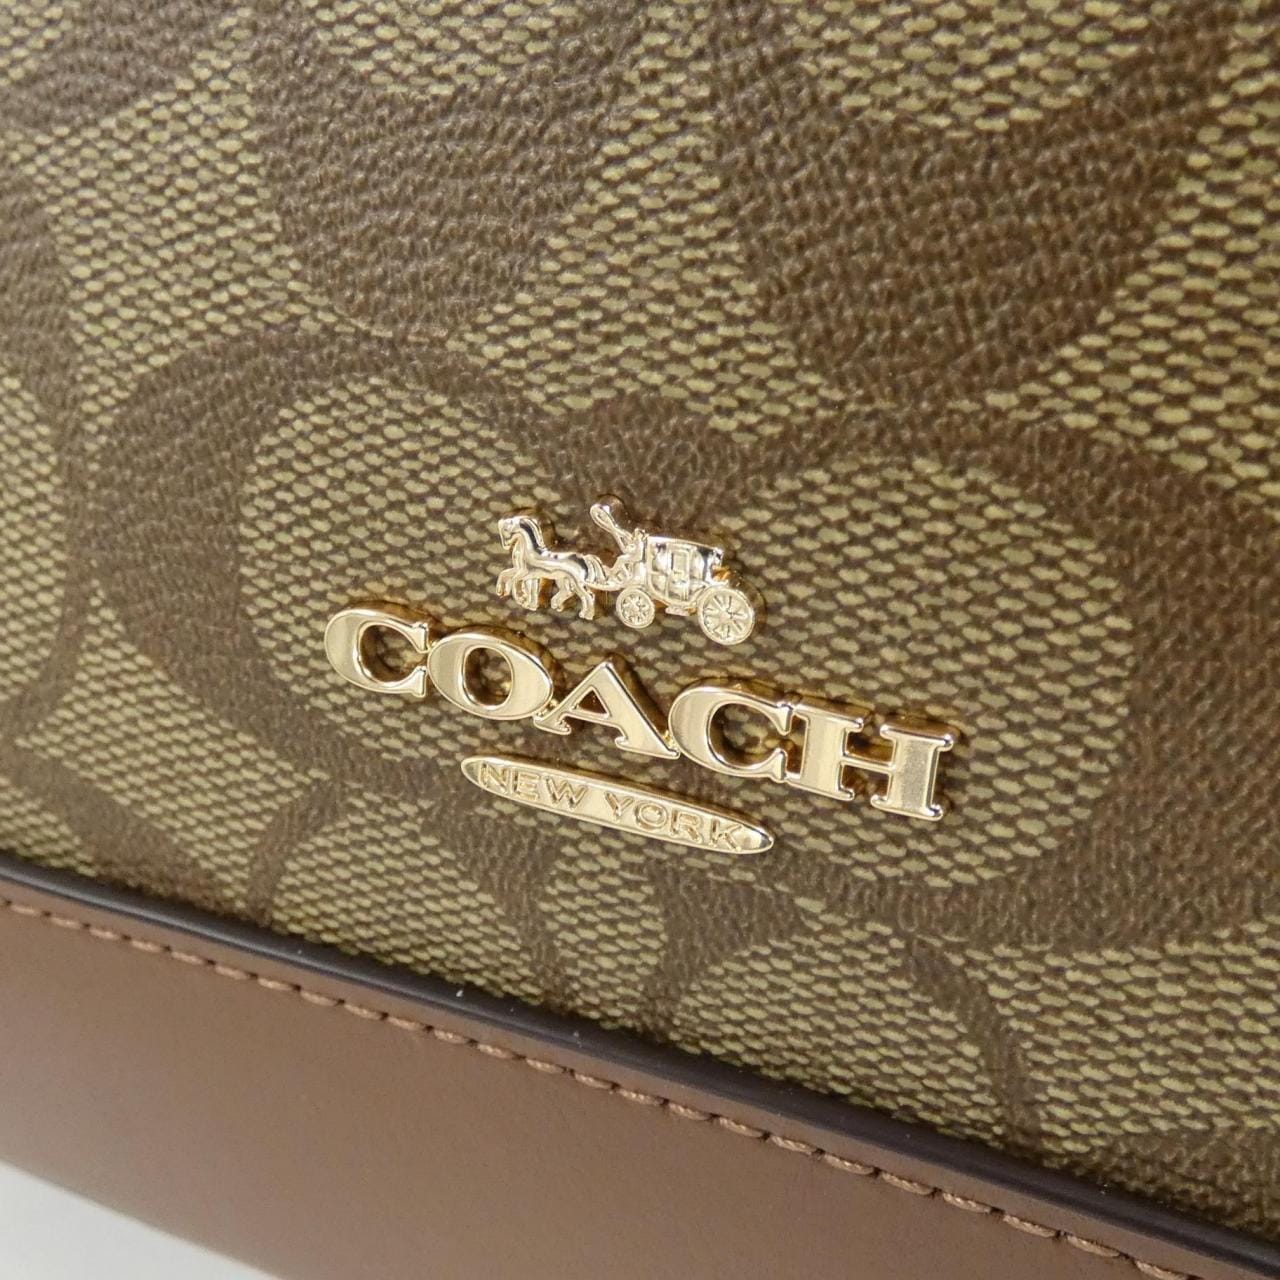 [BRAND NEW] Coach 27583 Bag